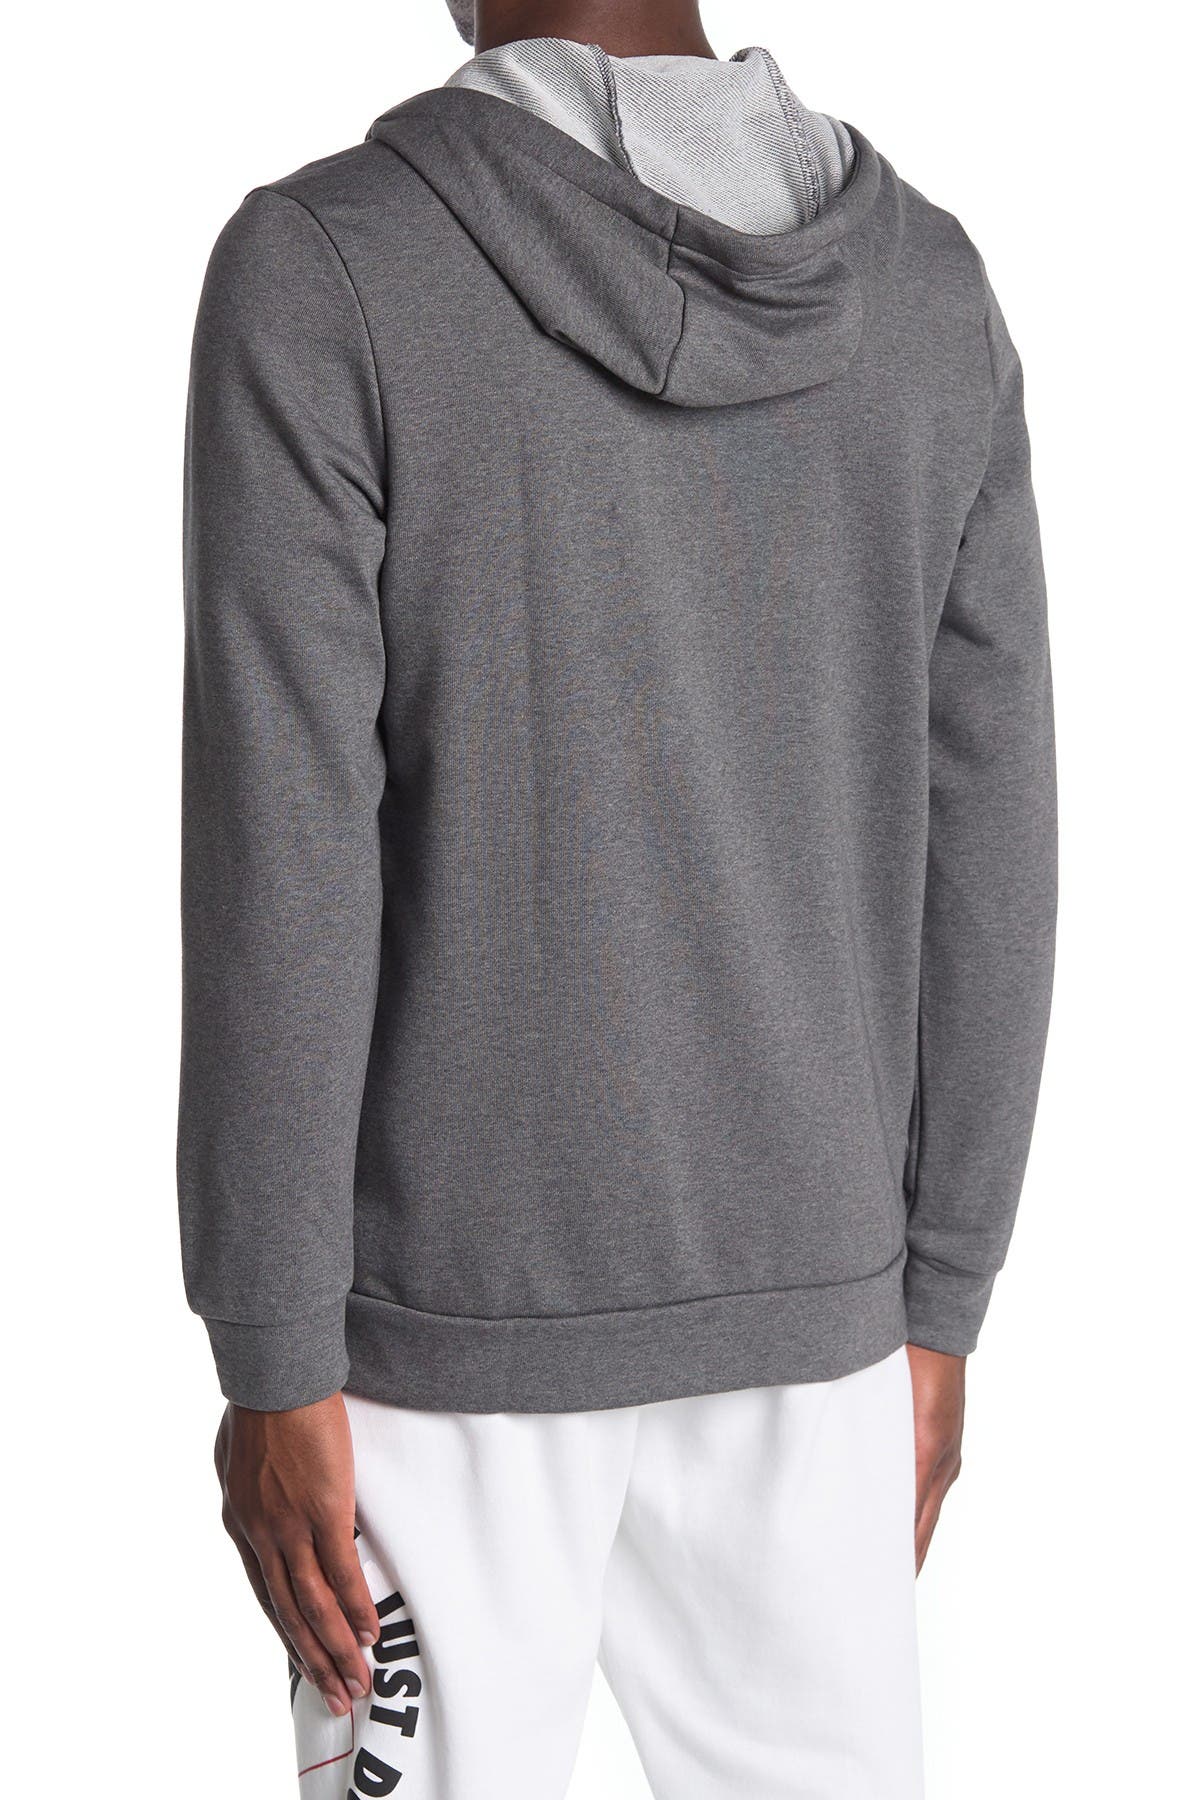 X IST Men's Funnel Neck Wheat/Charcoal Pullover Sweatshirt 2 